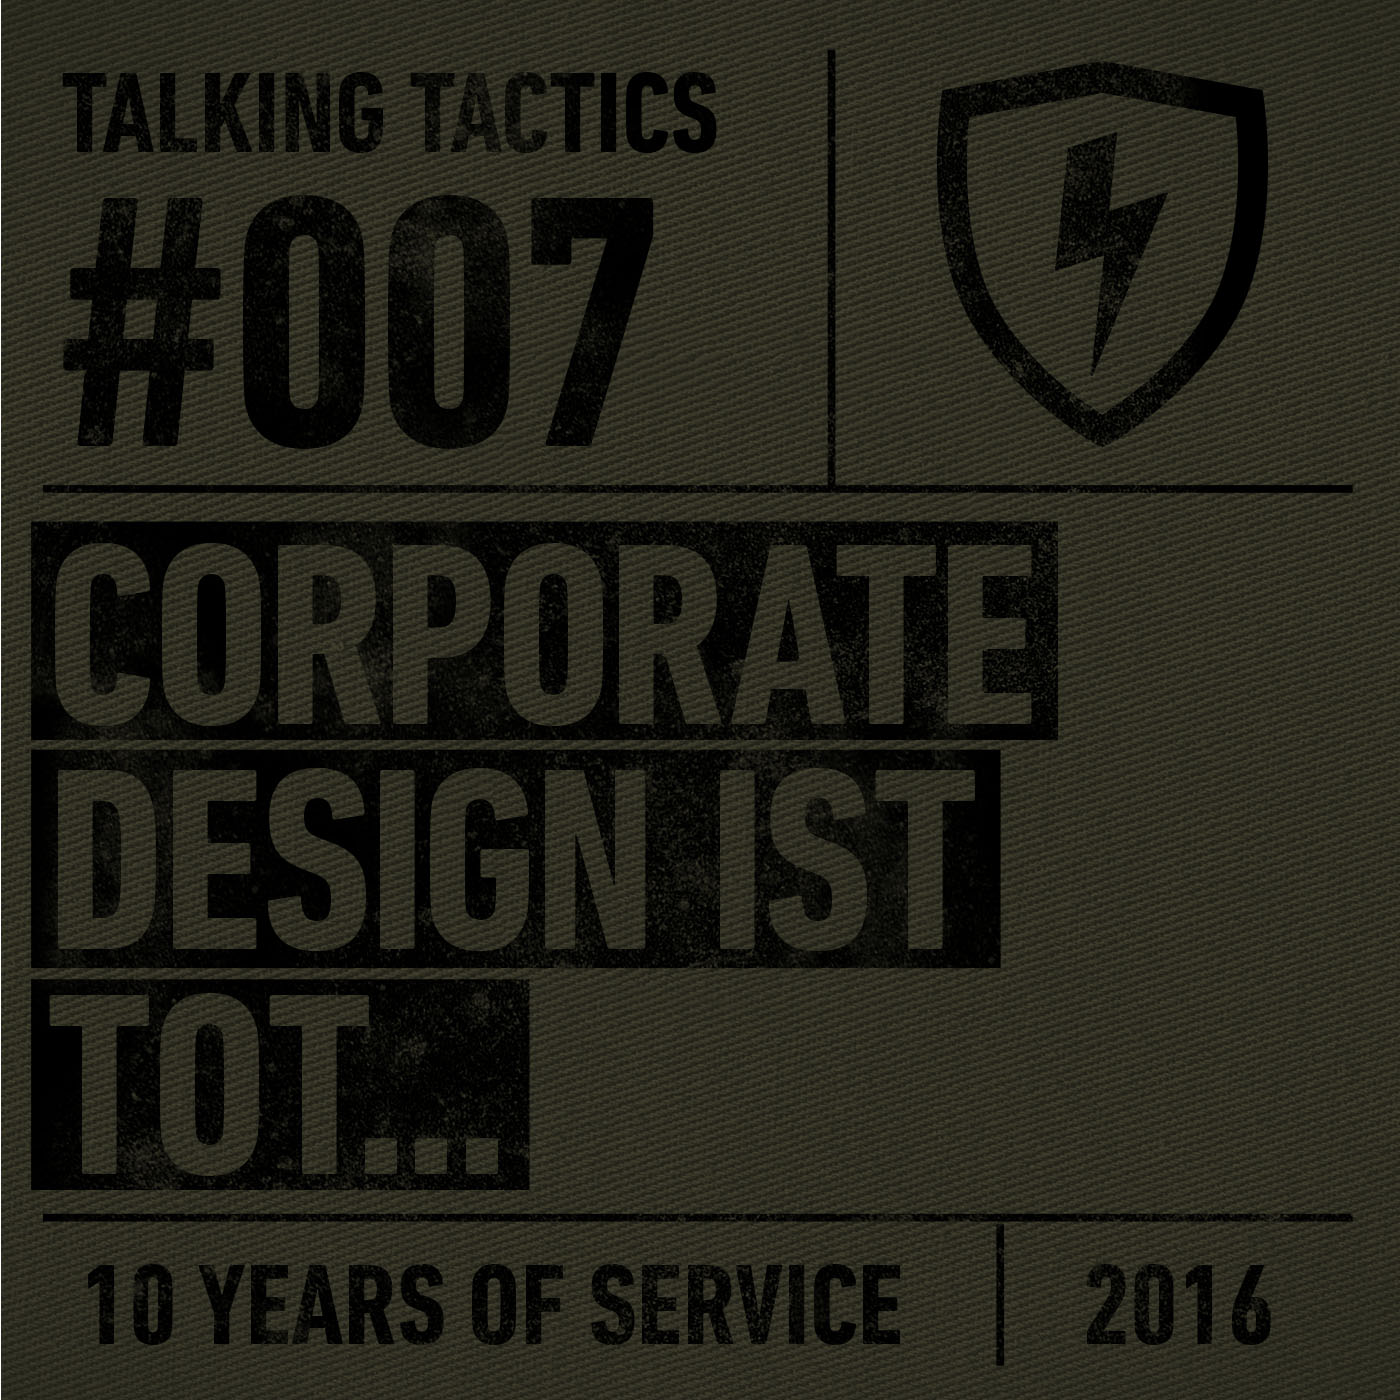 TalkingTactics_7_CorporateDesignIstTot